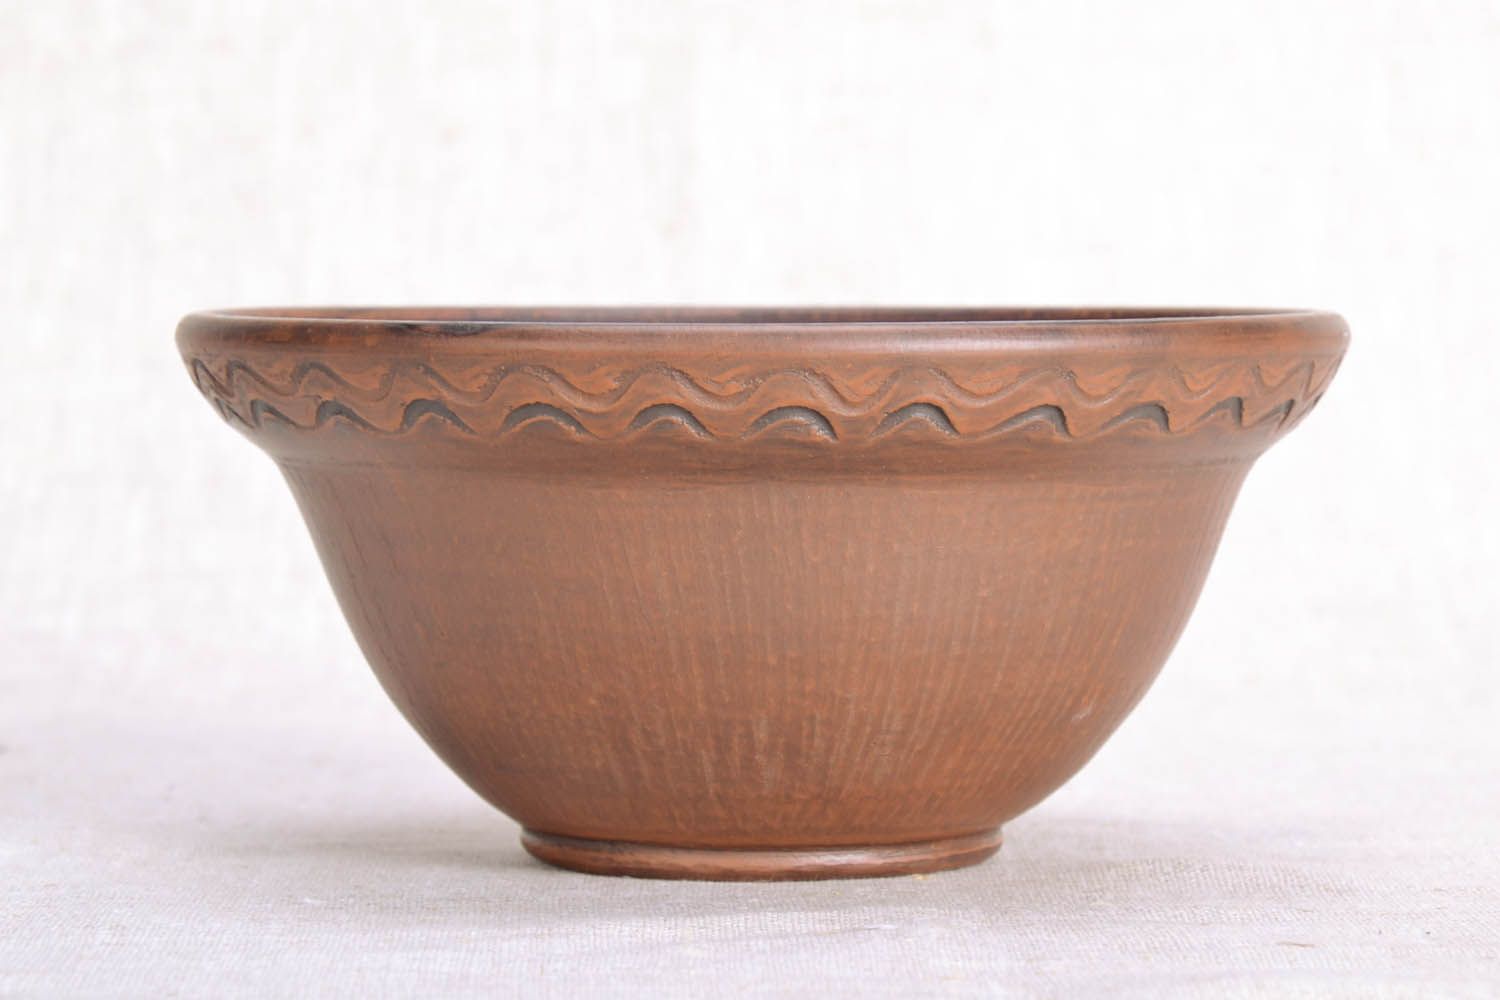 7 20 oz deep handmade clay bowl planter 0,79 lb photo 2